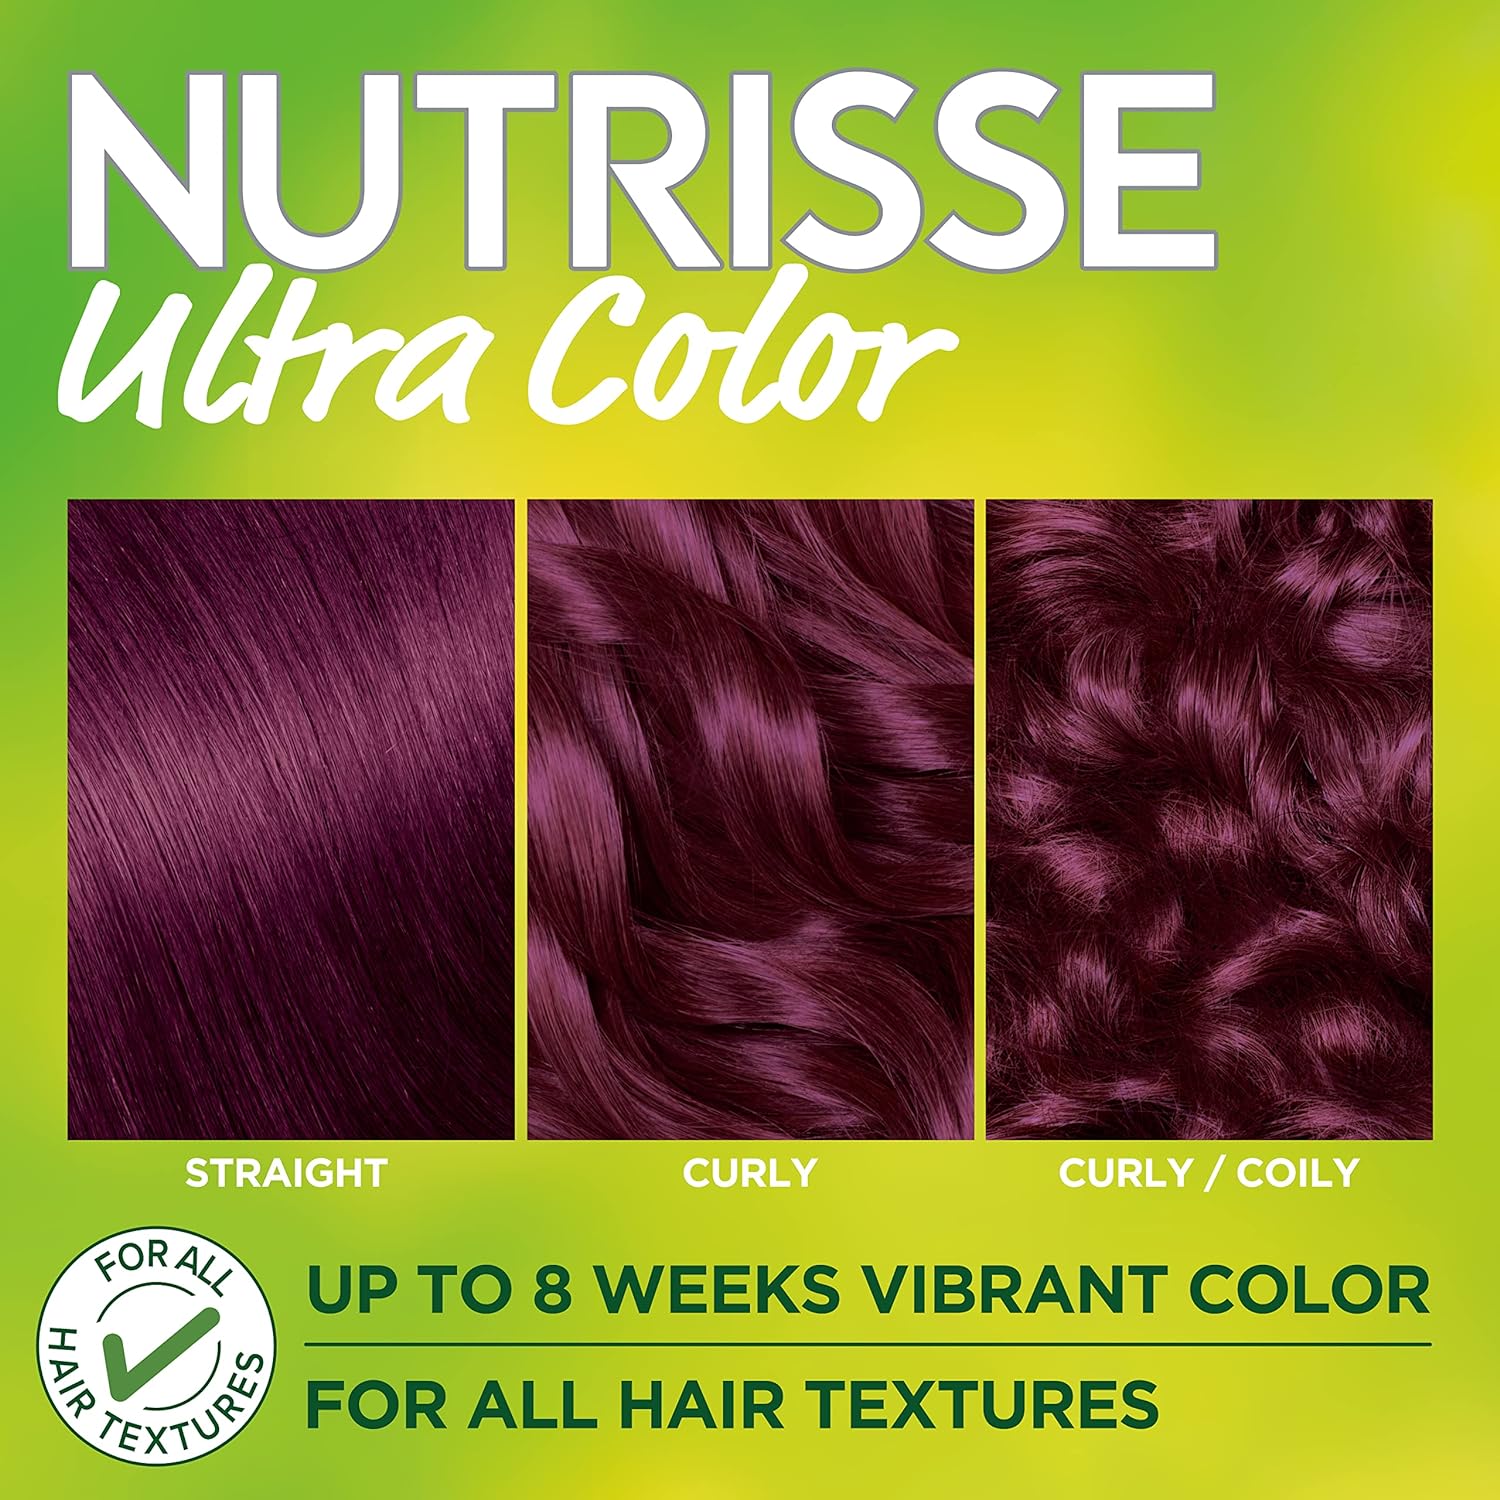 Garnier Hair Color Nutrisse Ultra Color Nourishing Creme, V2 Dark Intense Violet (Spiced Plum) Purple Permanent Hair Dye, 2 Count (Packaging May Vary) : Everything Else